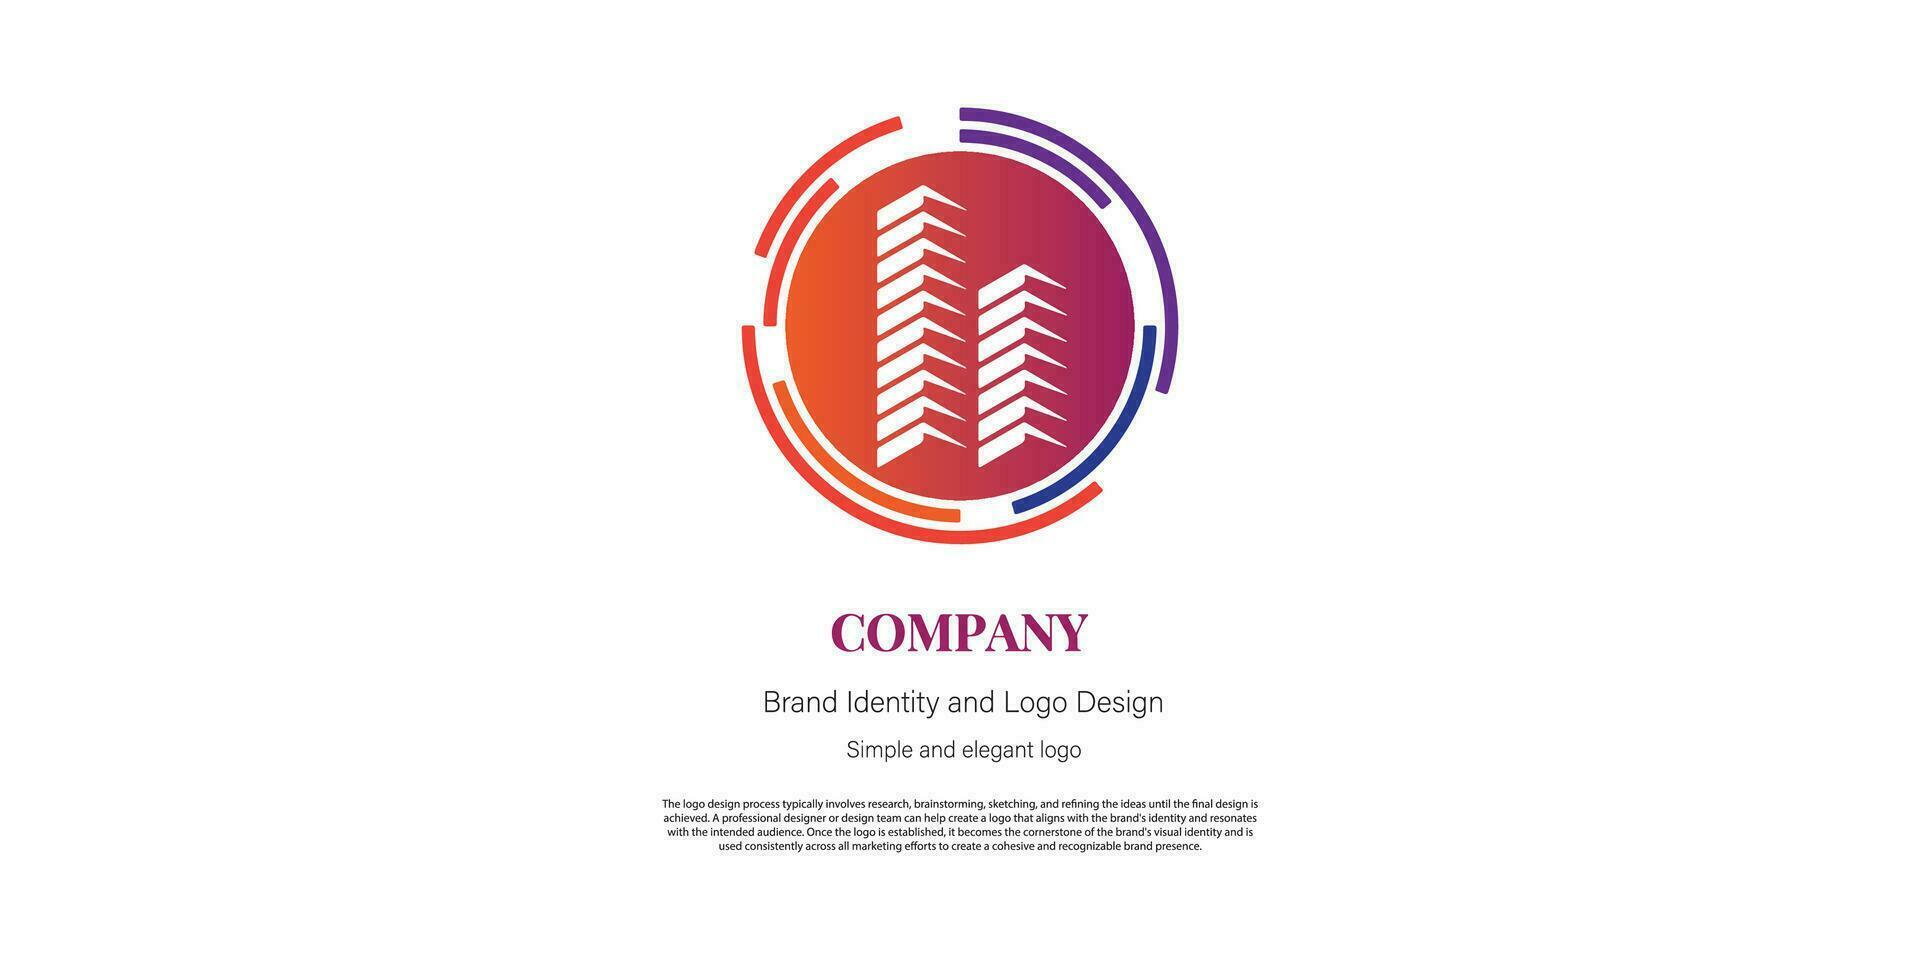 education and study logo design for graphic designer or web developer vector